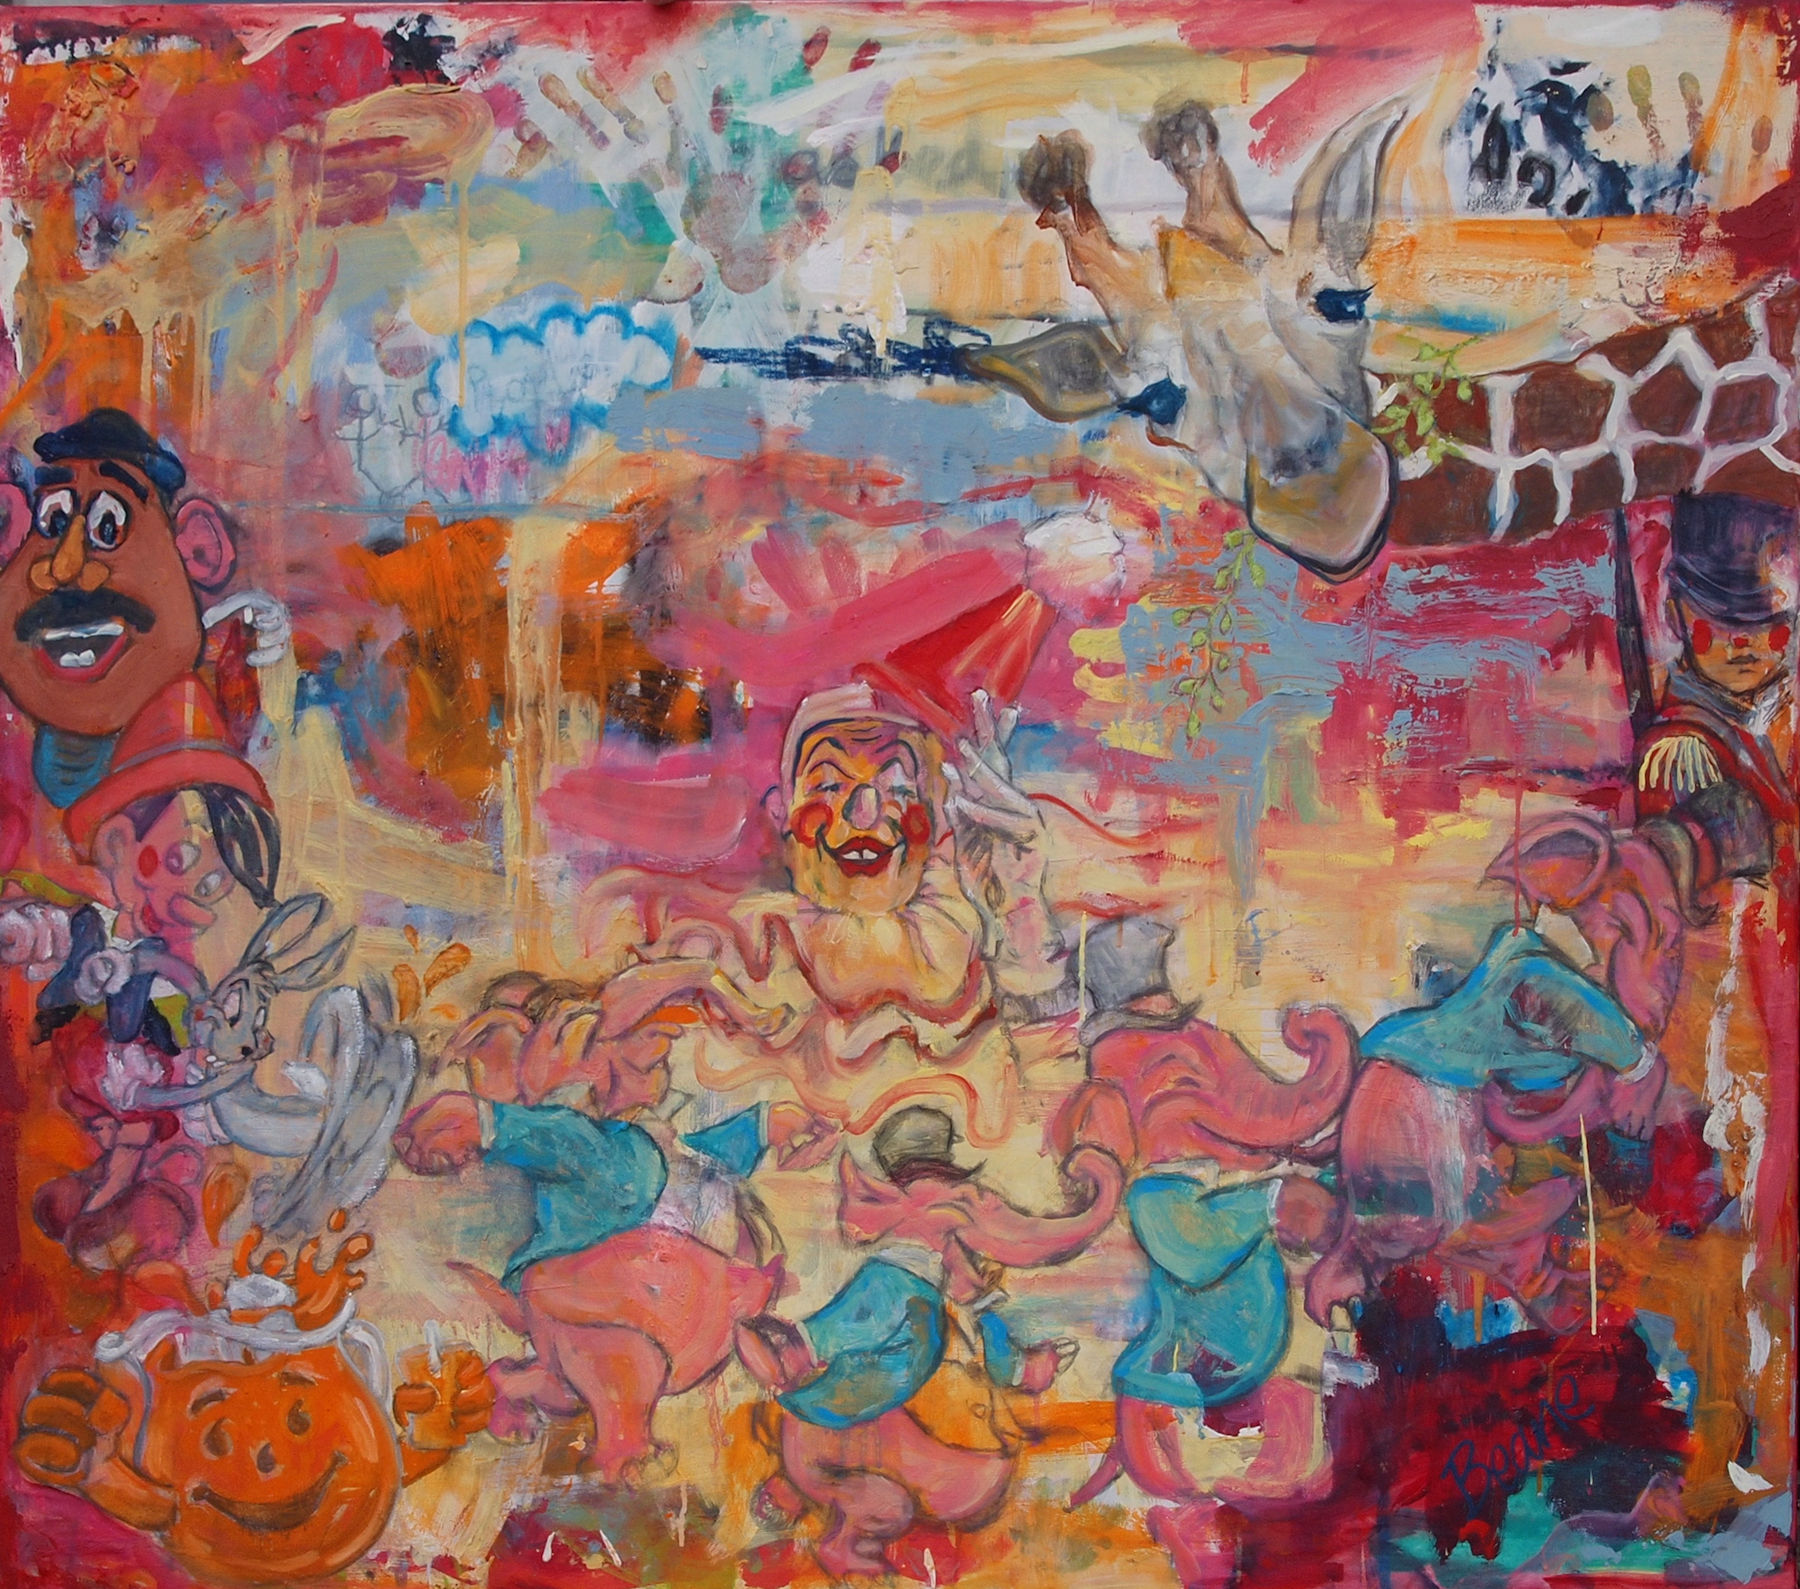 Galerie Erdel | Lisa Beane: March of the pink elephants